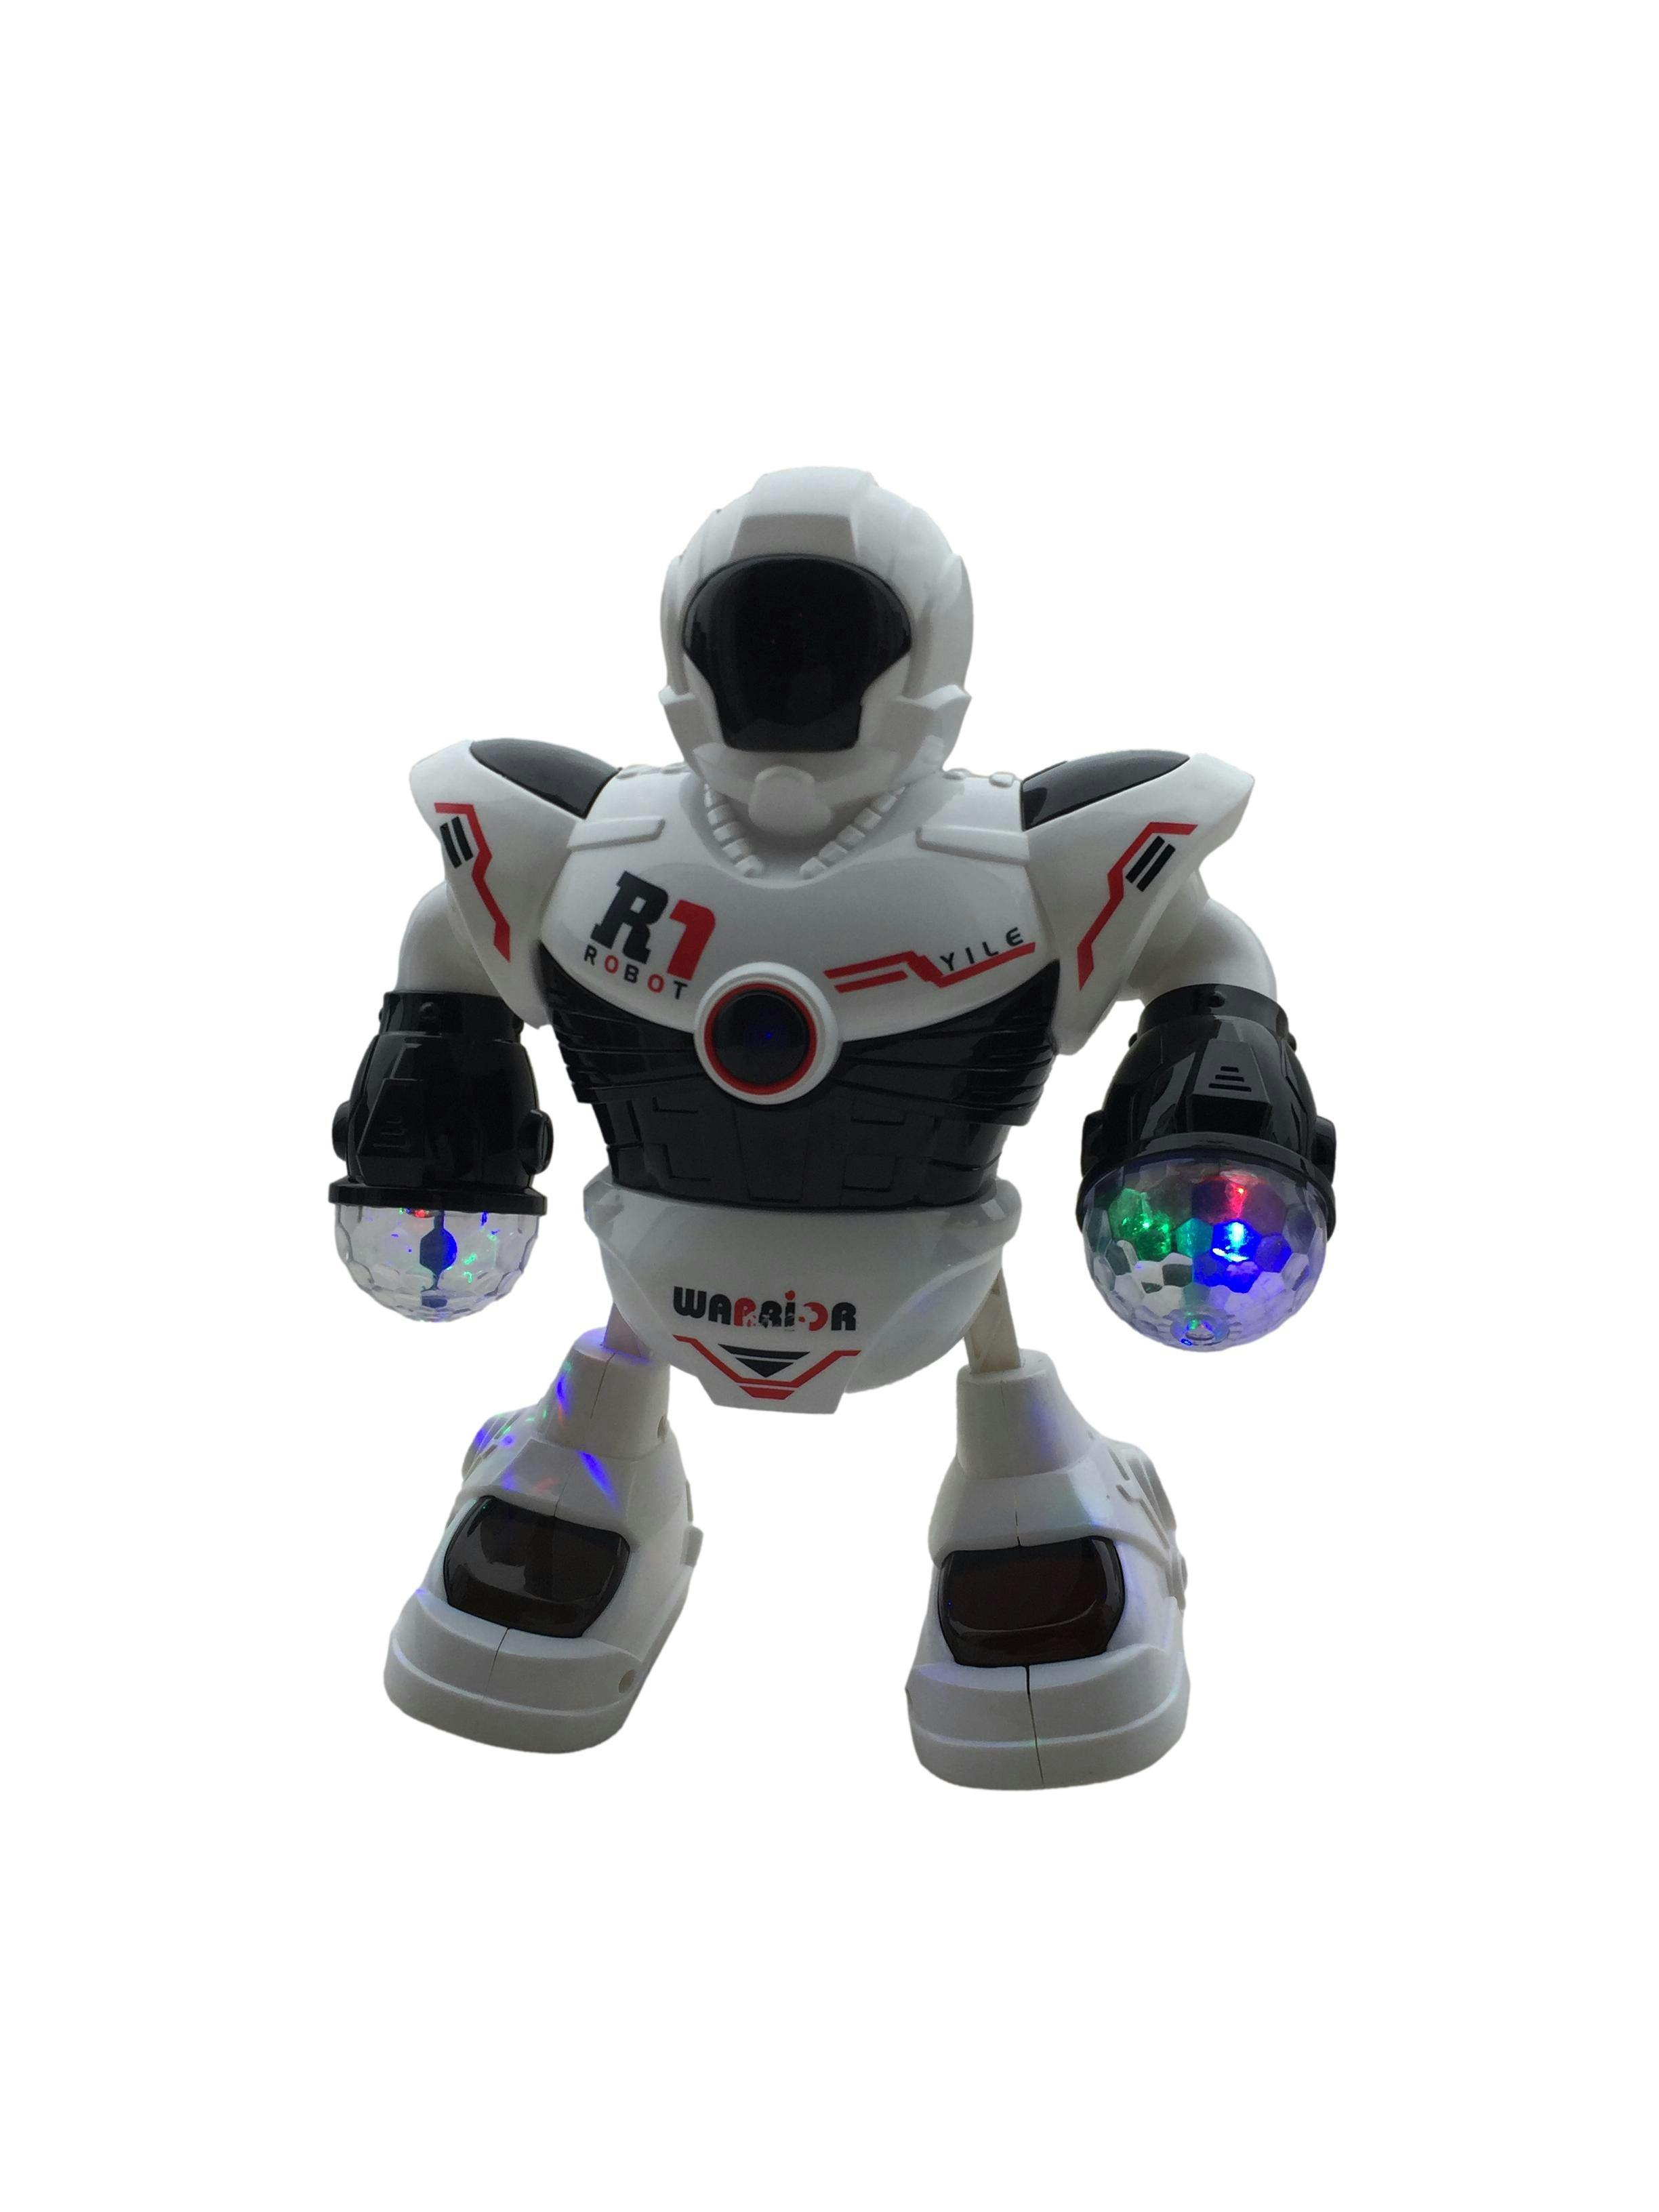 Robot Policía del espacio bailarín 3D con luces de colores. Opera a baterías. 3+ años. 